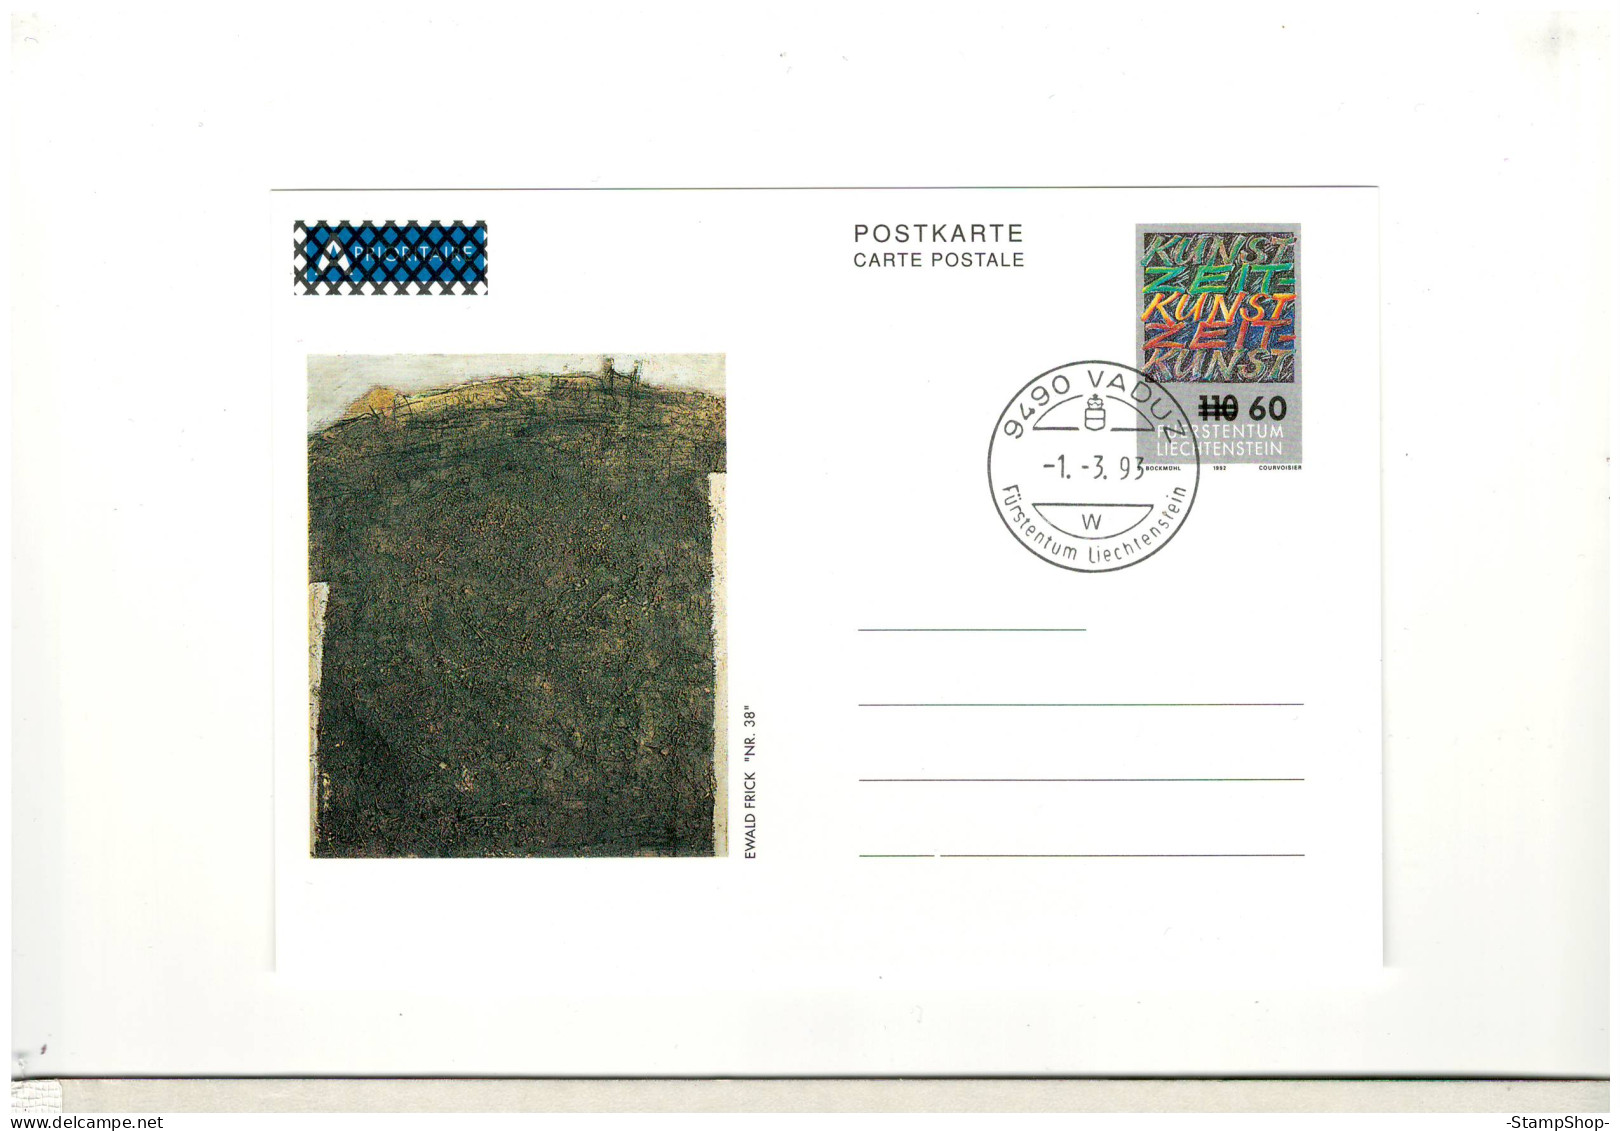 1993 Liechtenstein - Vaduz Postmark, Art, Overprint With Lower Value - Postcard - BX2043 - Covers & Documents